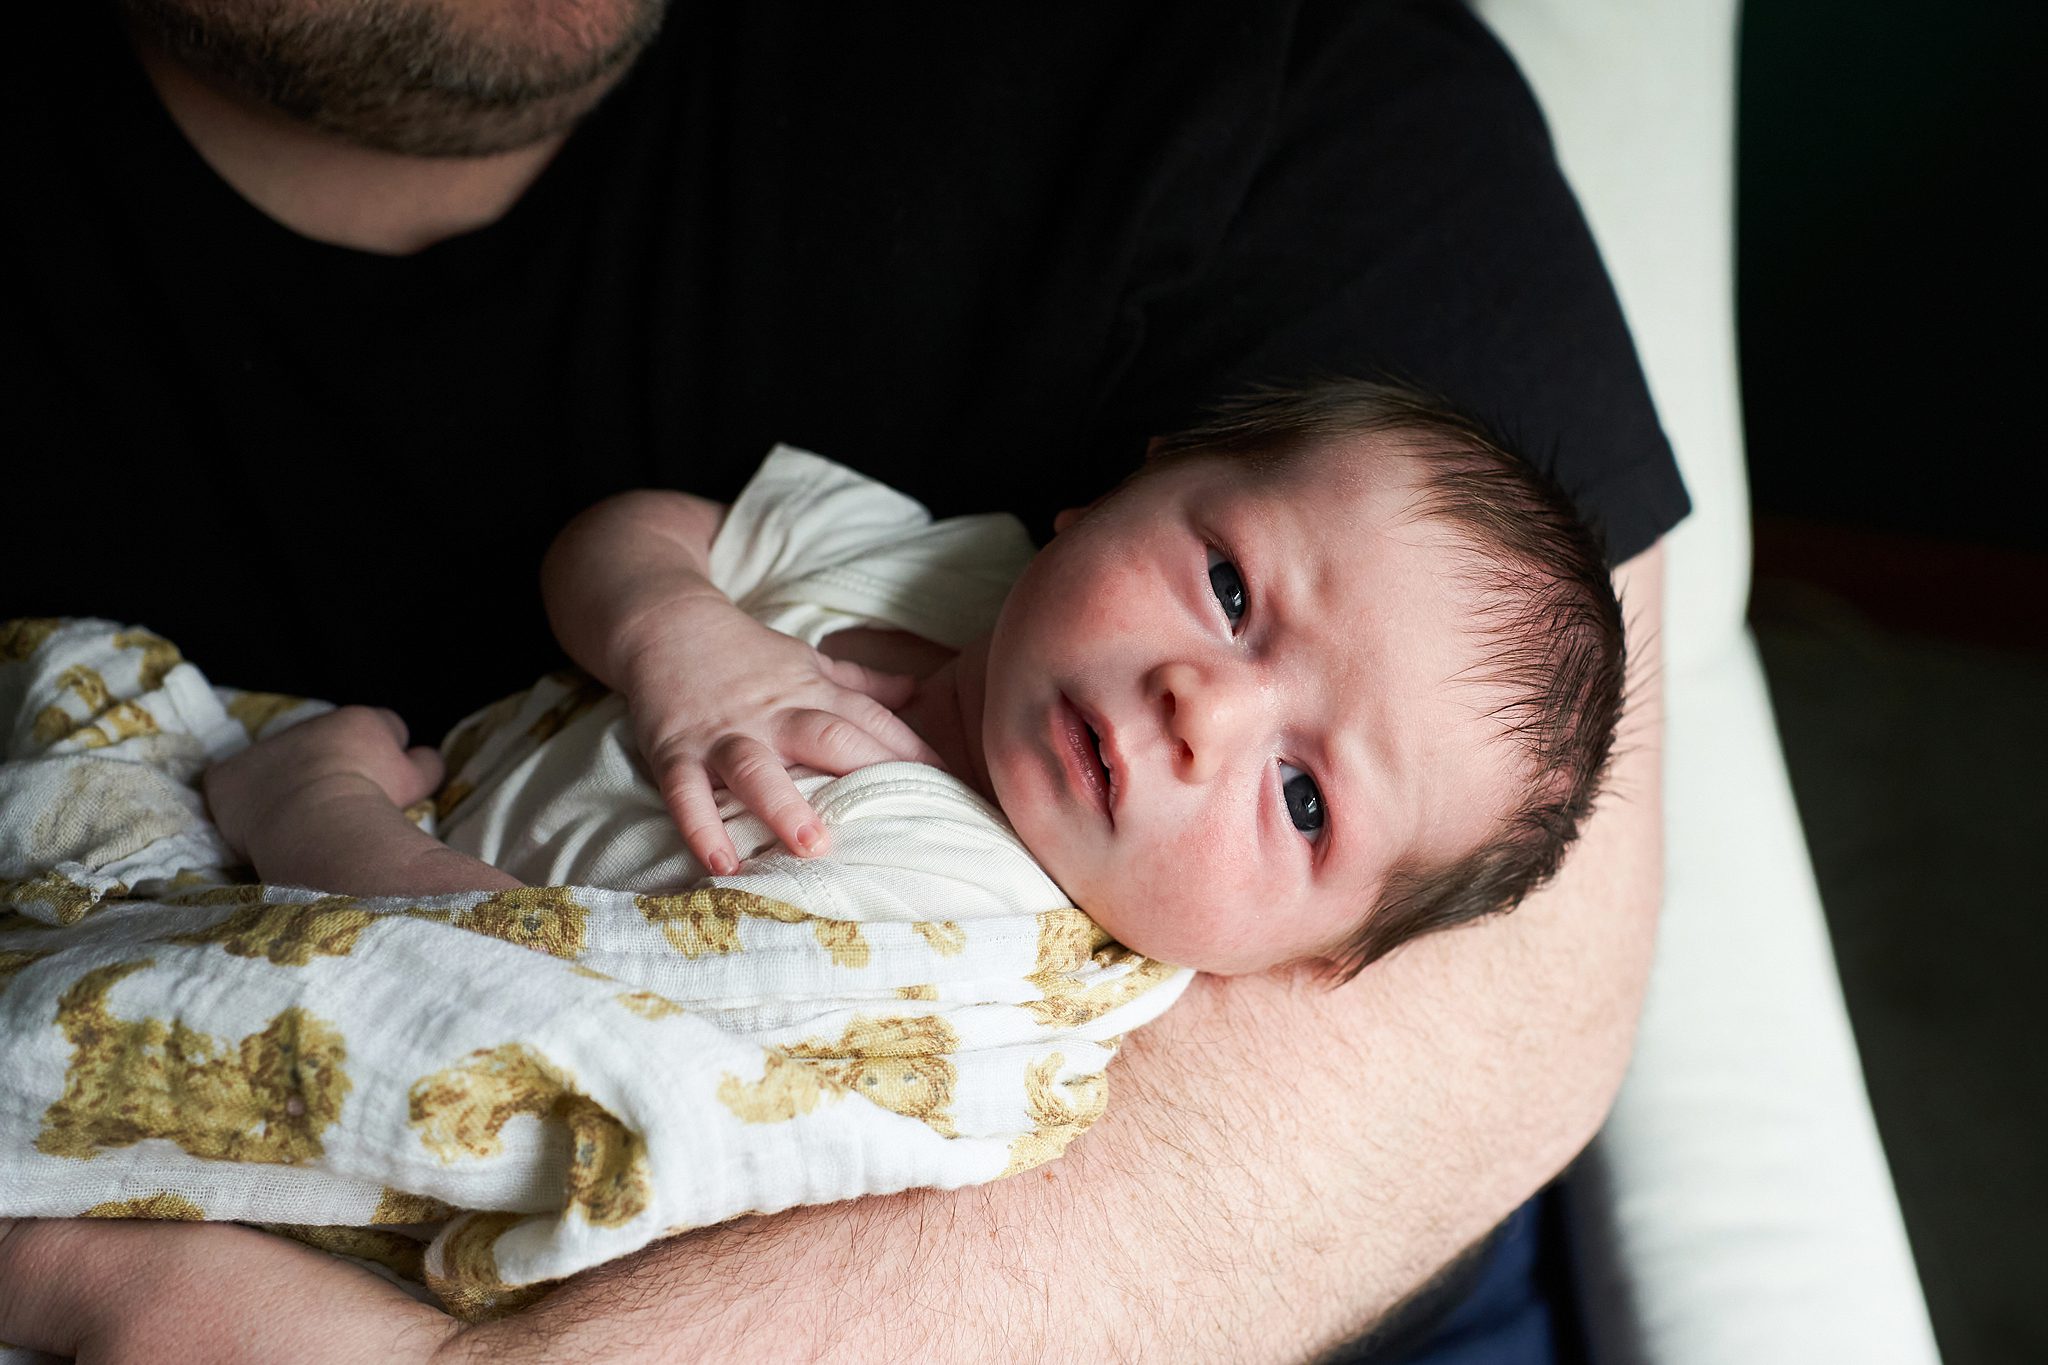 awake newborn baby with golden doodle blanket